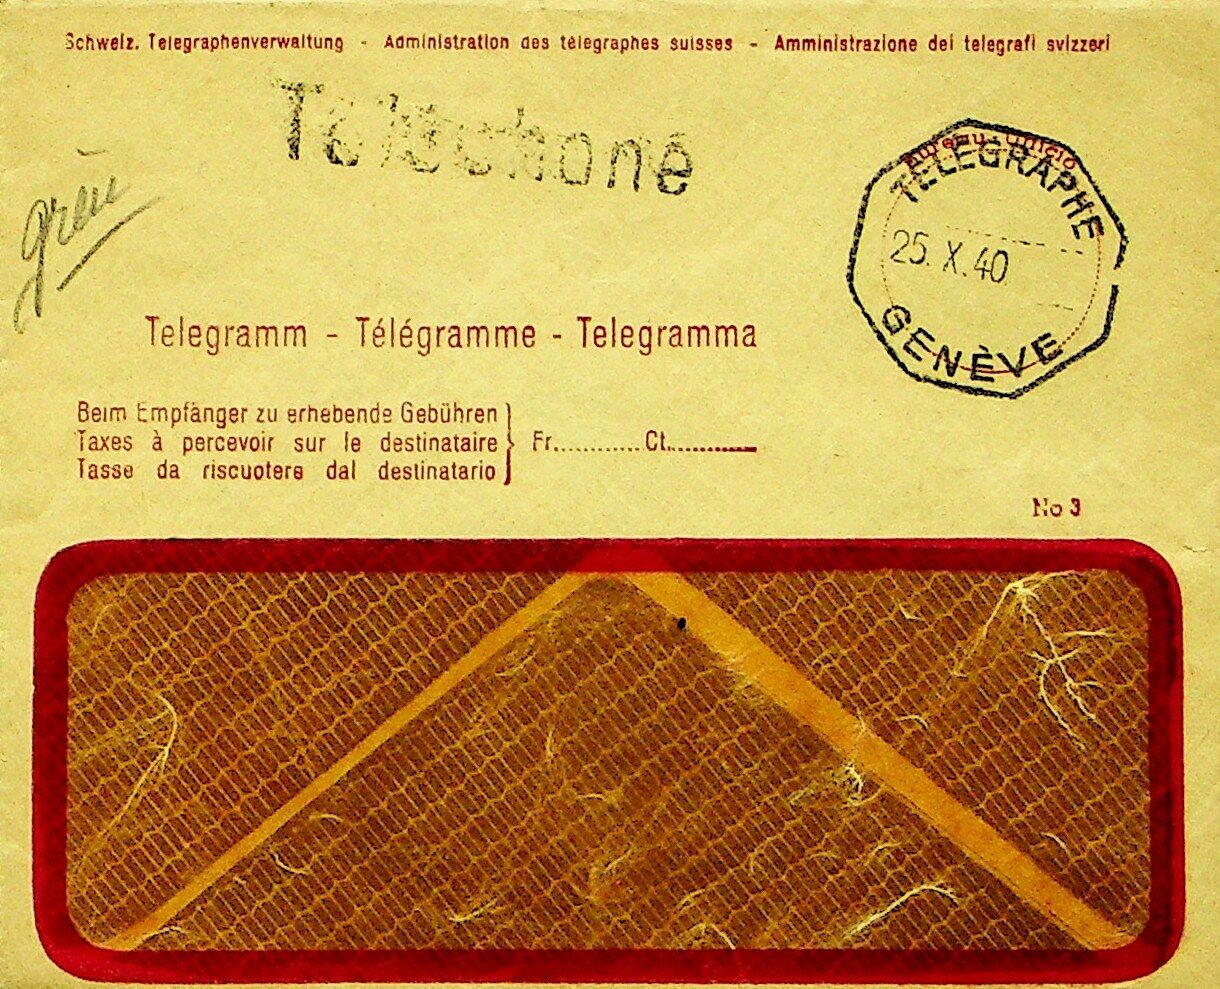 1940 envelope